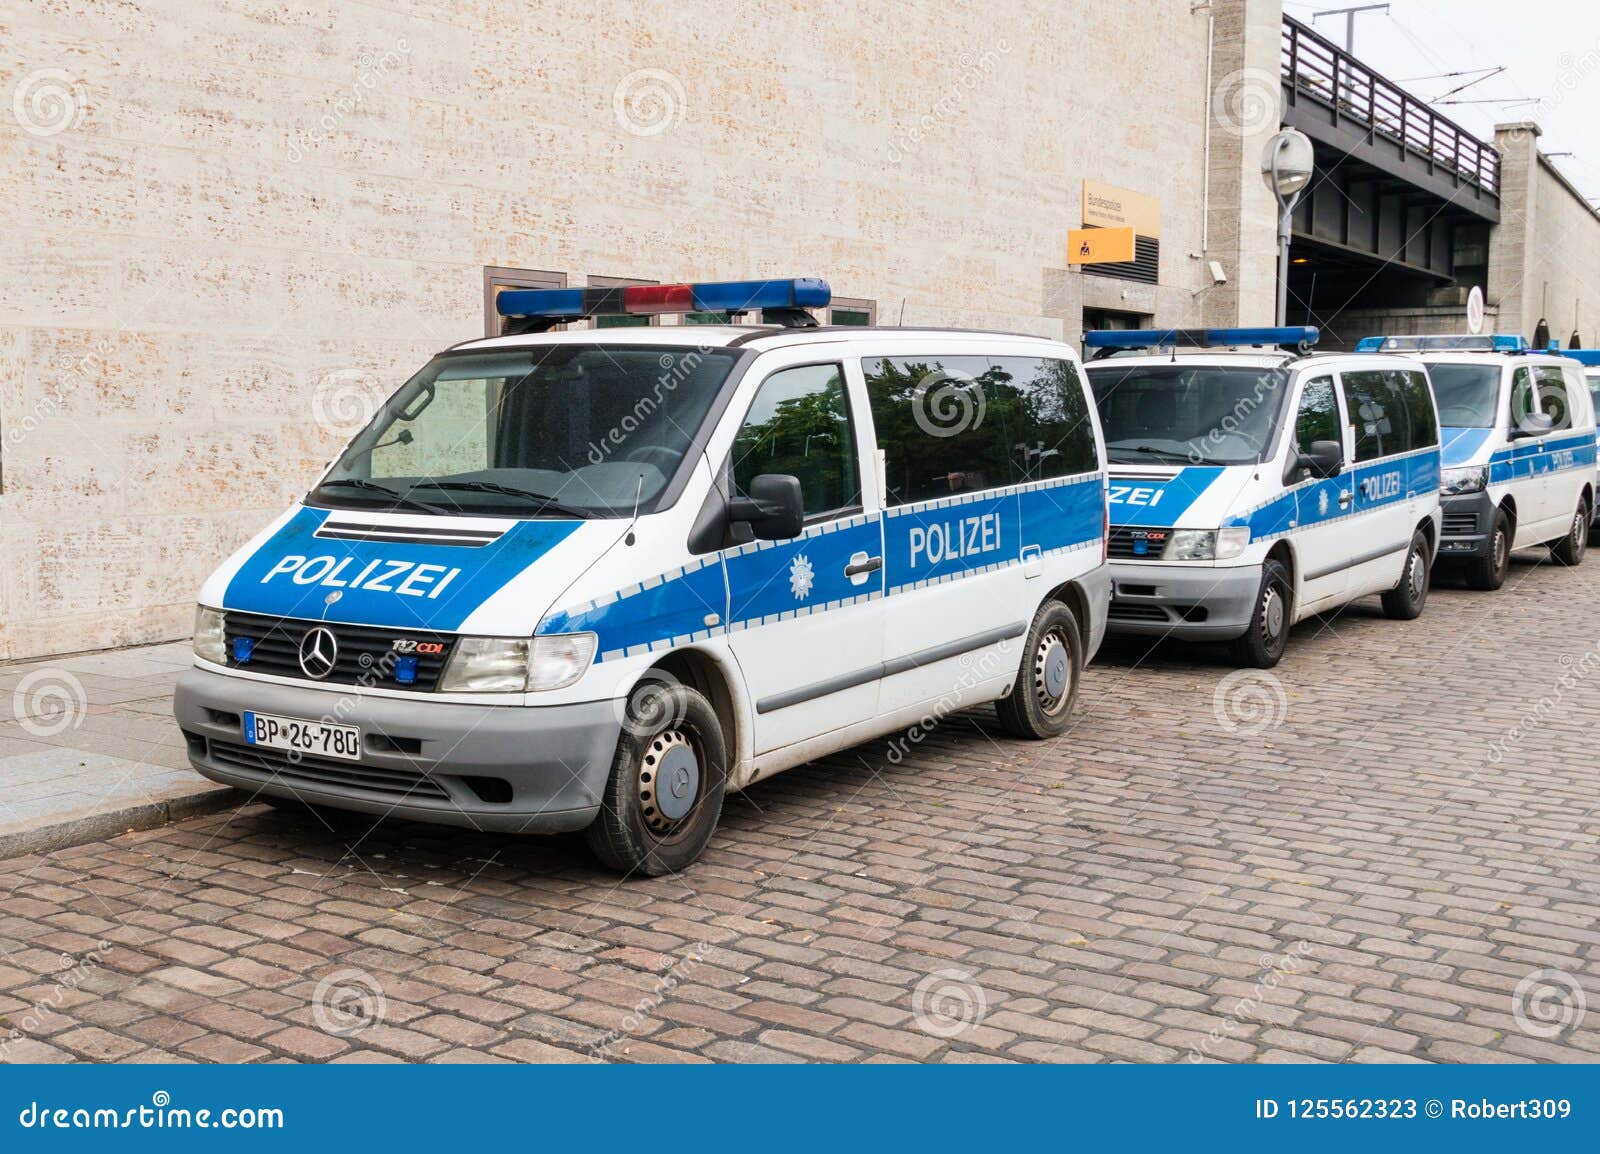 German Polizei Car. Polizei is the German Word for Police